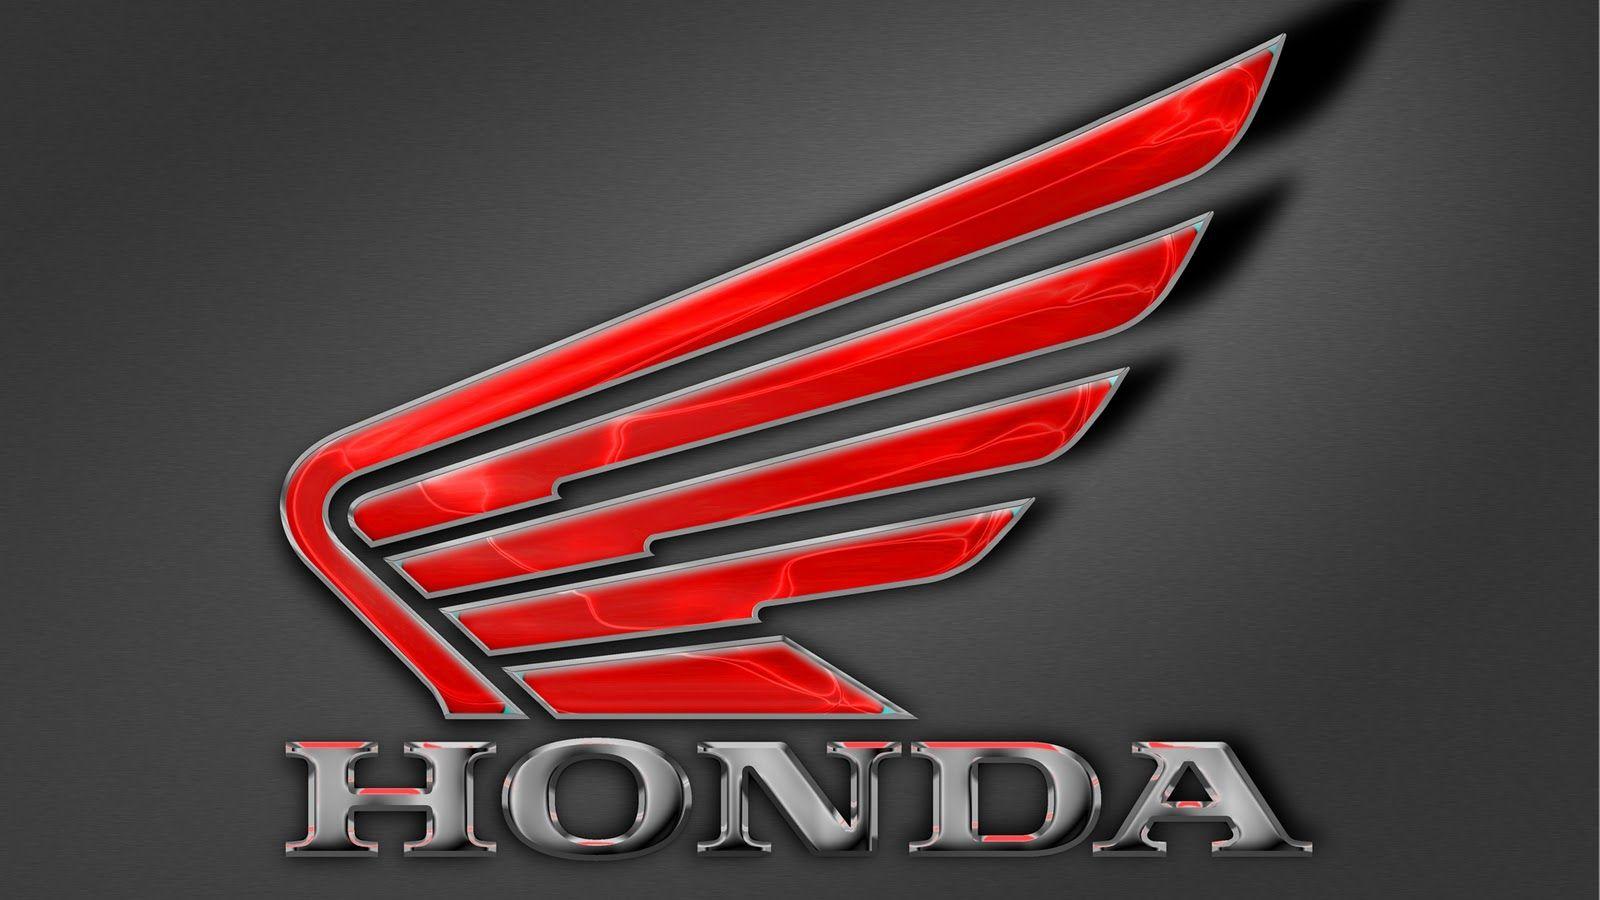 Cool Honda Logo - Honda motorcycle Logos